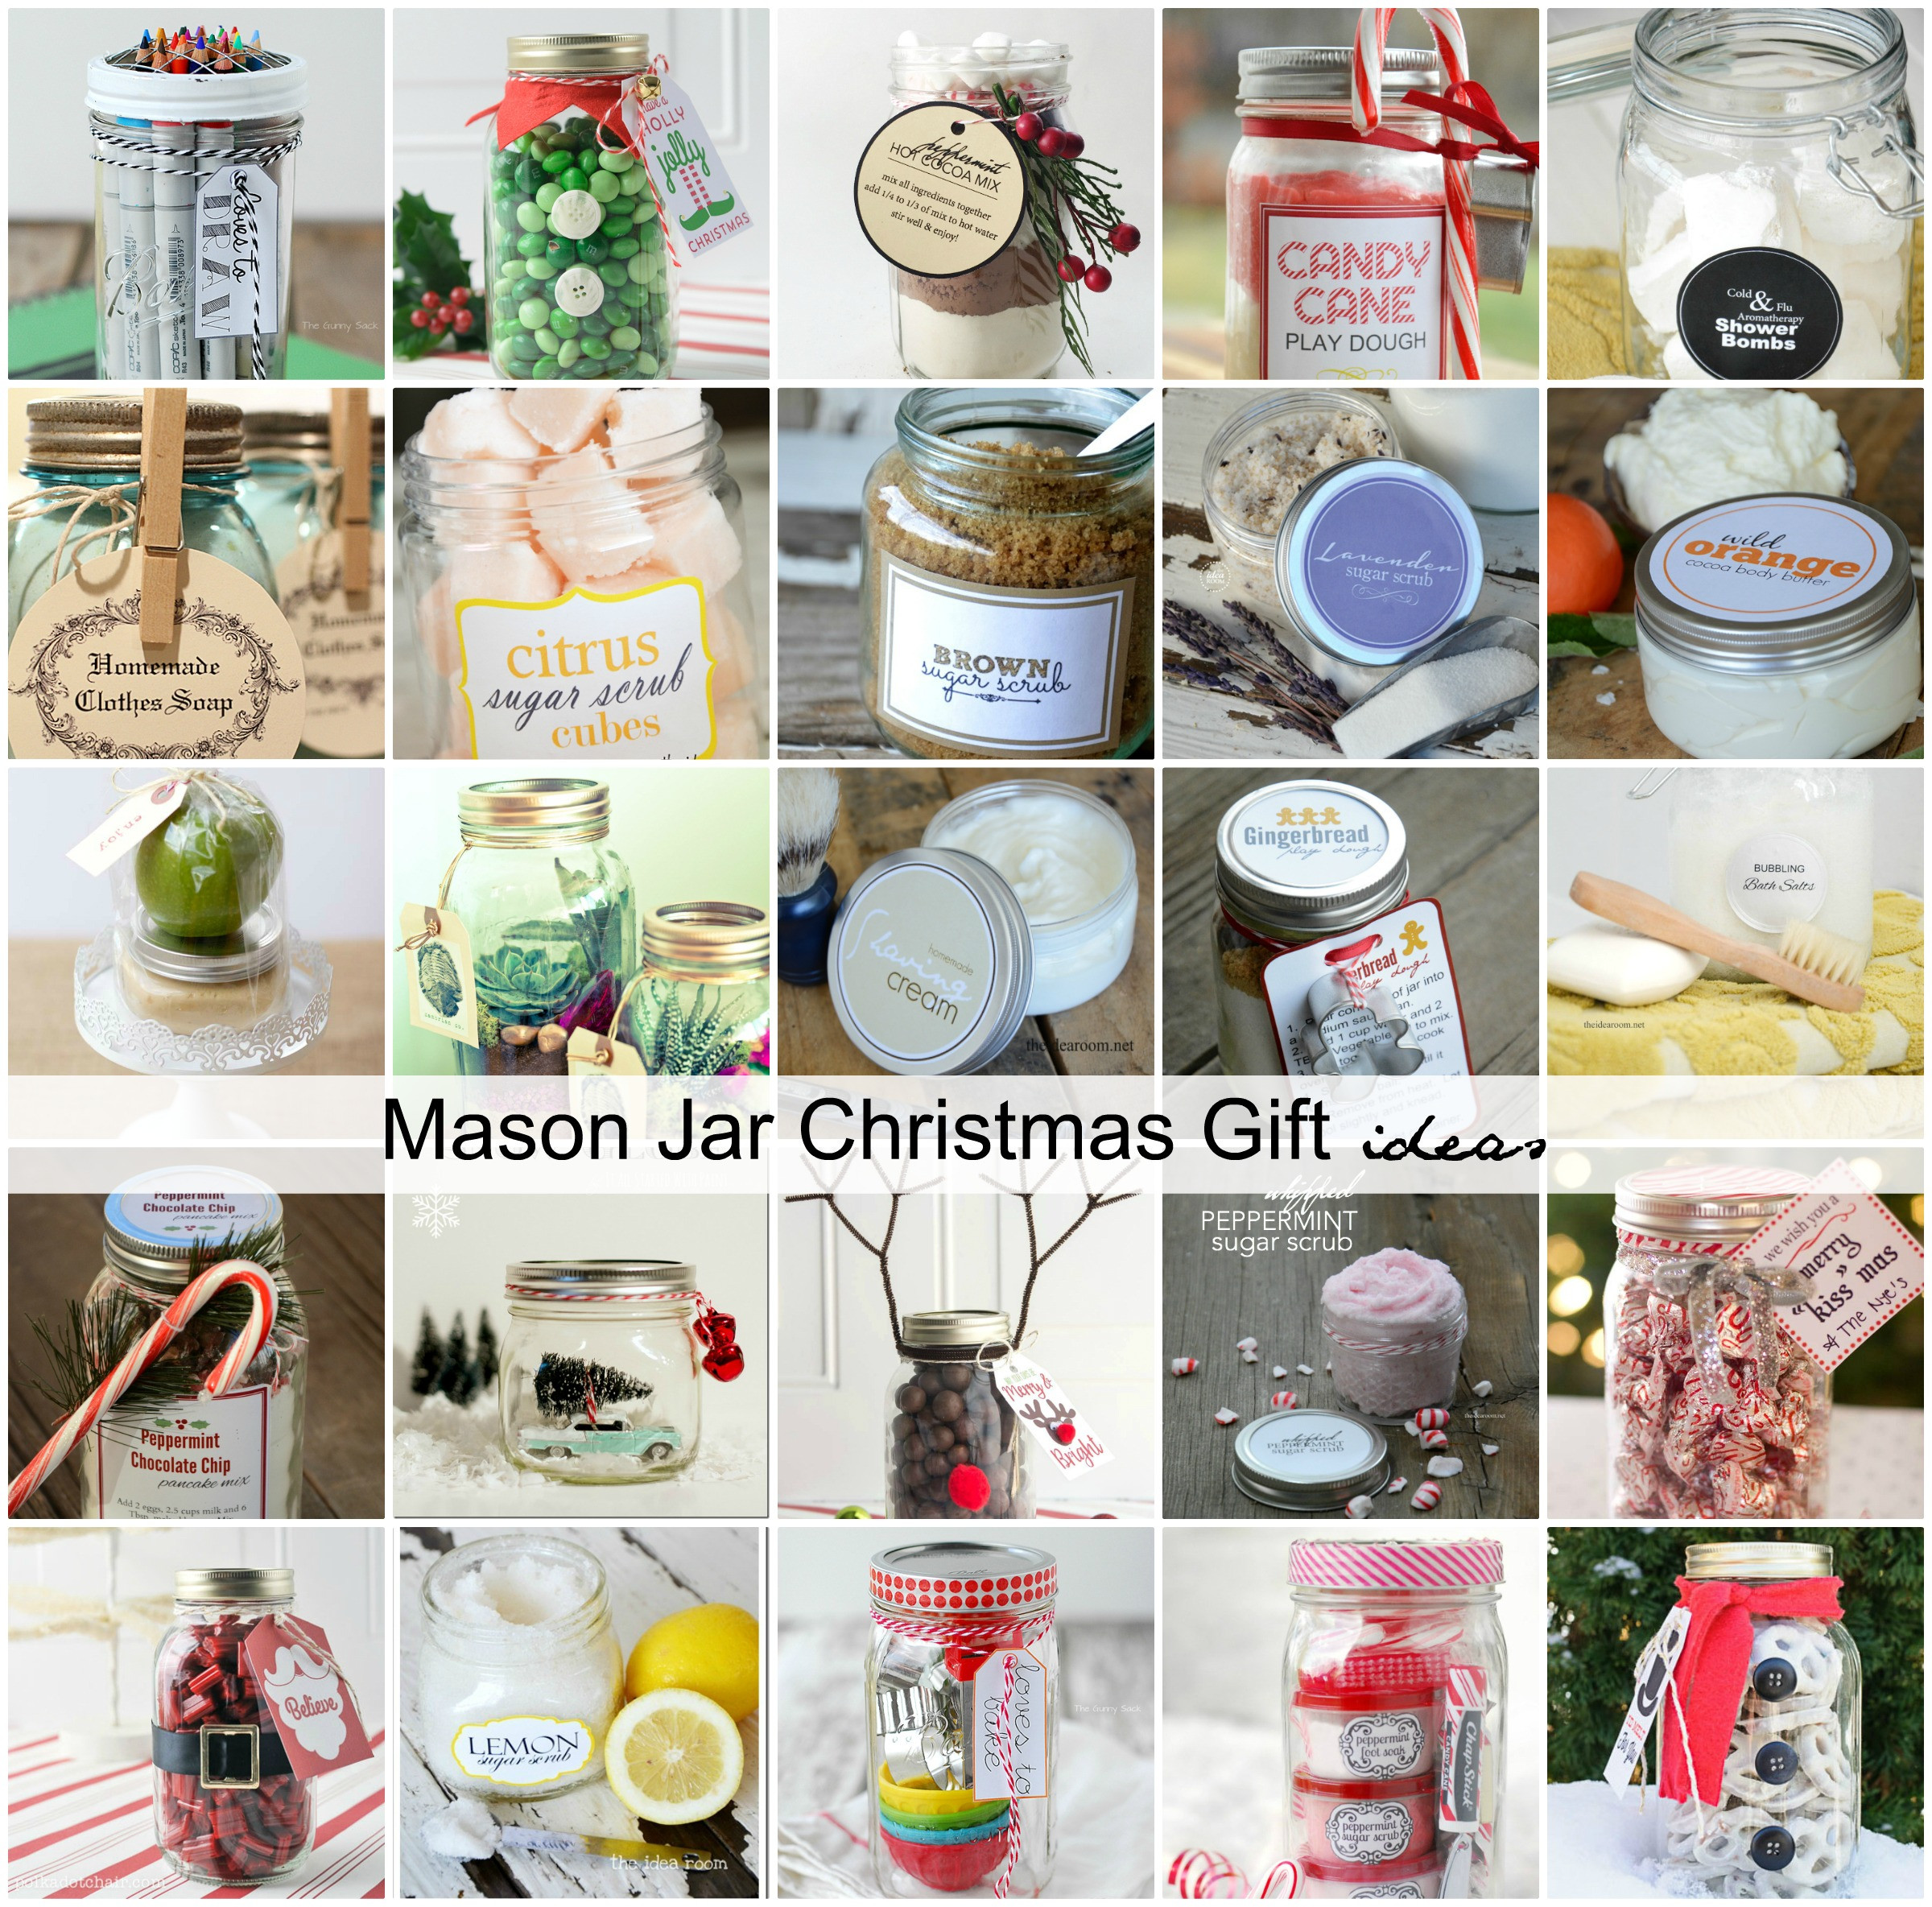 Best ideas about Mason Jar Gift Ideas For Christmas
. Save or Pin Mason Jar Christmas Gift Ideas The Idea Room Now.